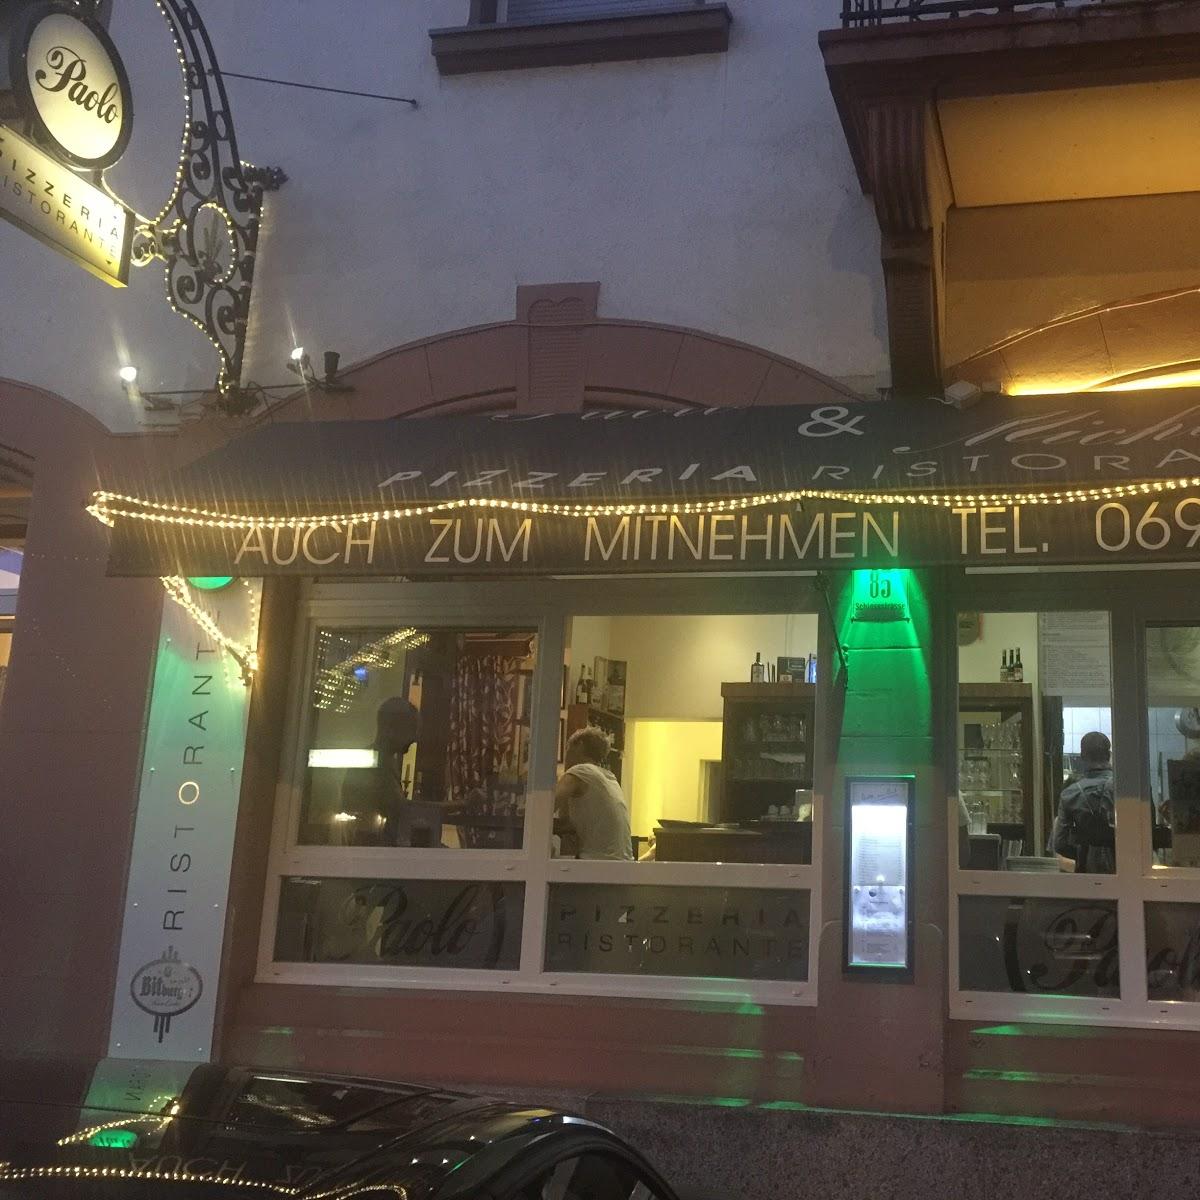 Restaurant "Pizzeria Paolo" in Frankfurt am Main